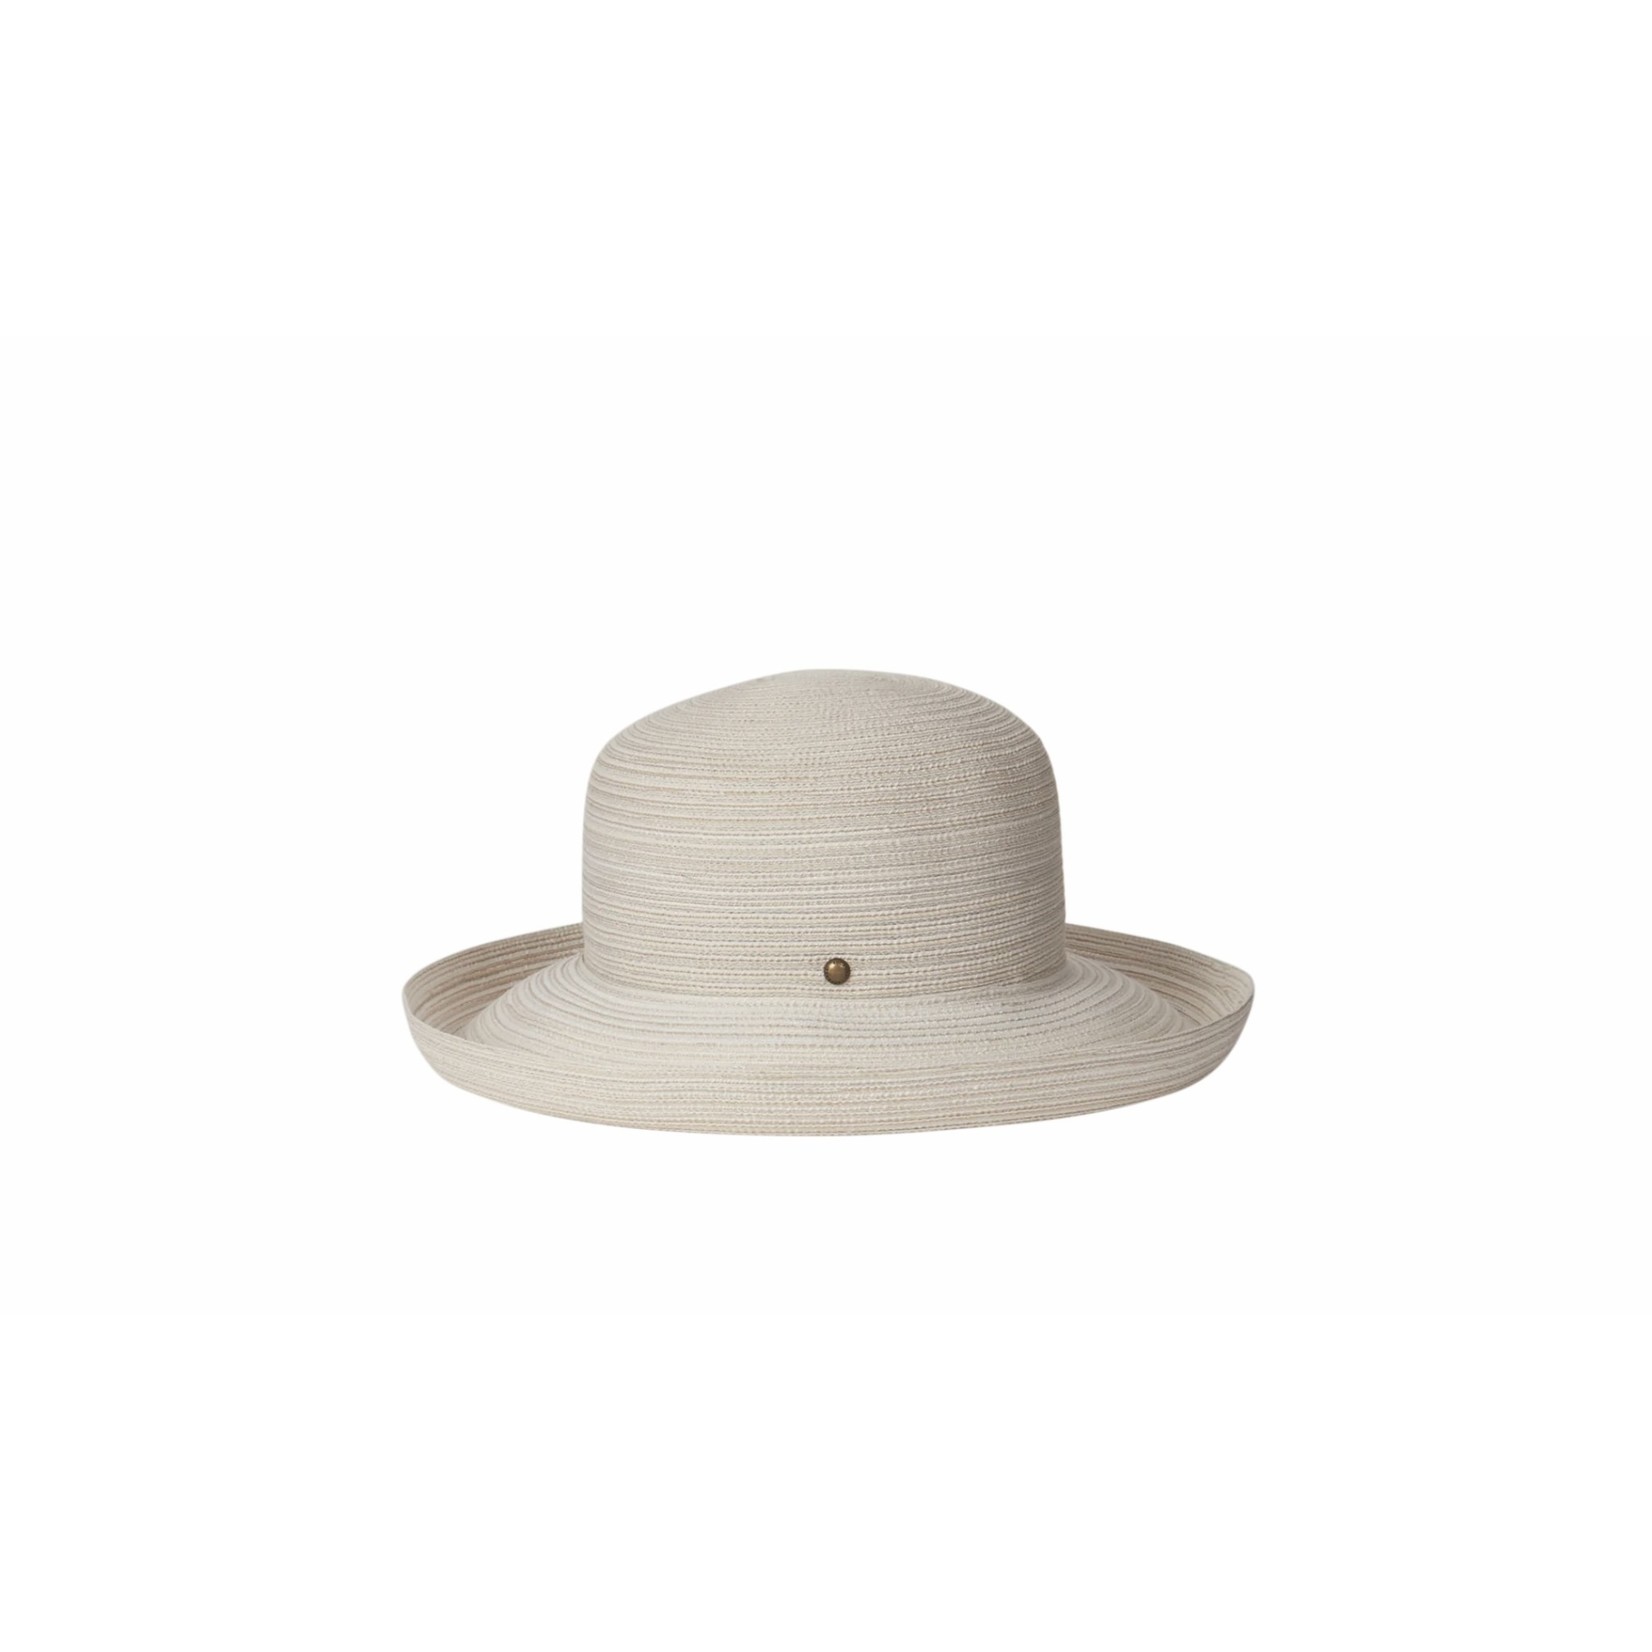 Kooringal Sunrise Upturn Hat in White